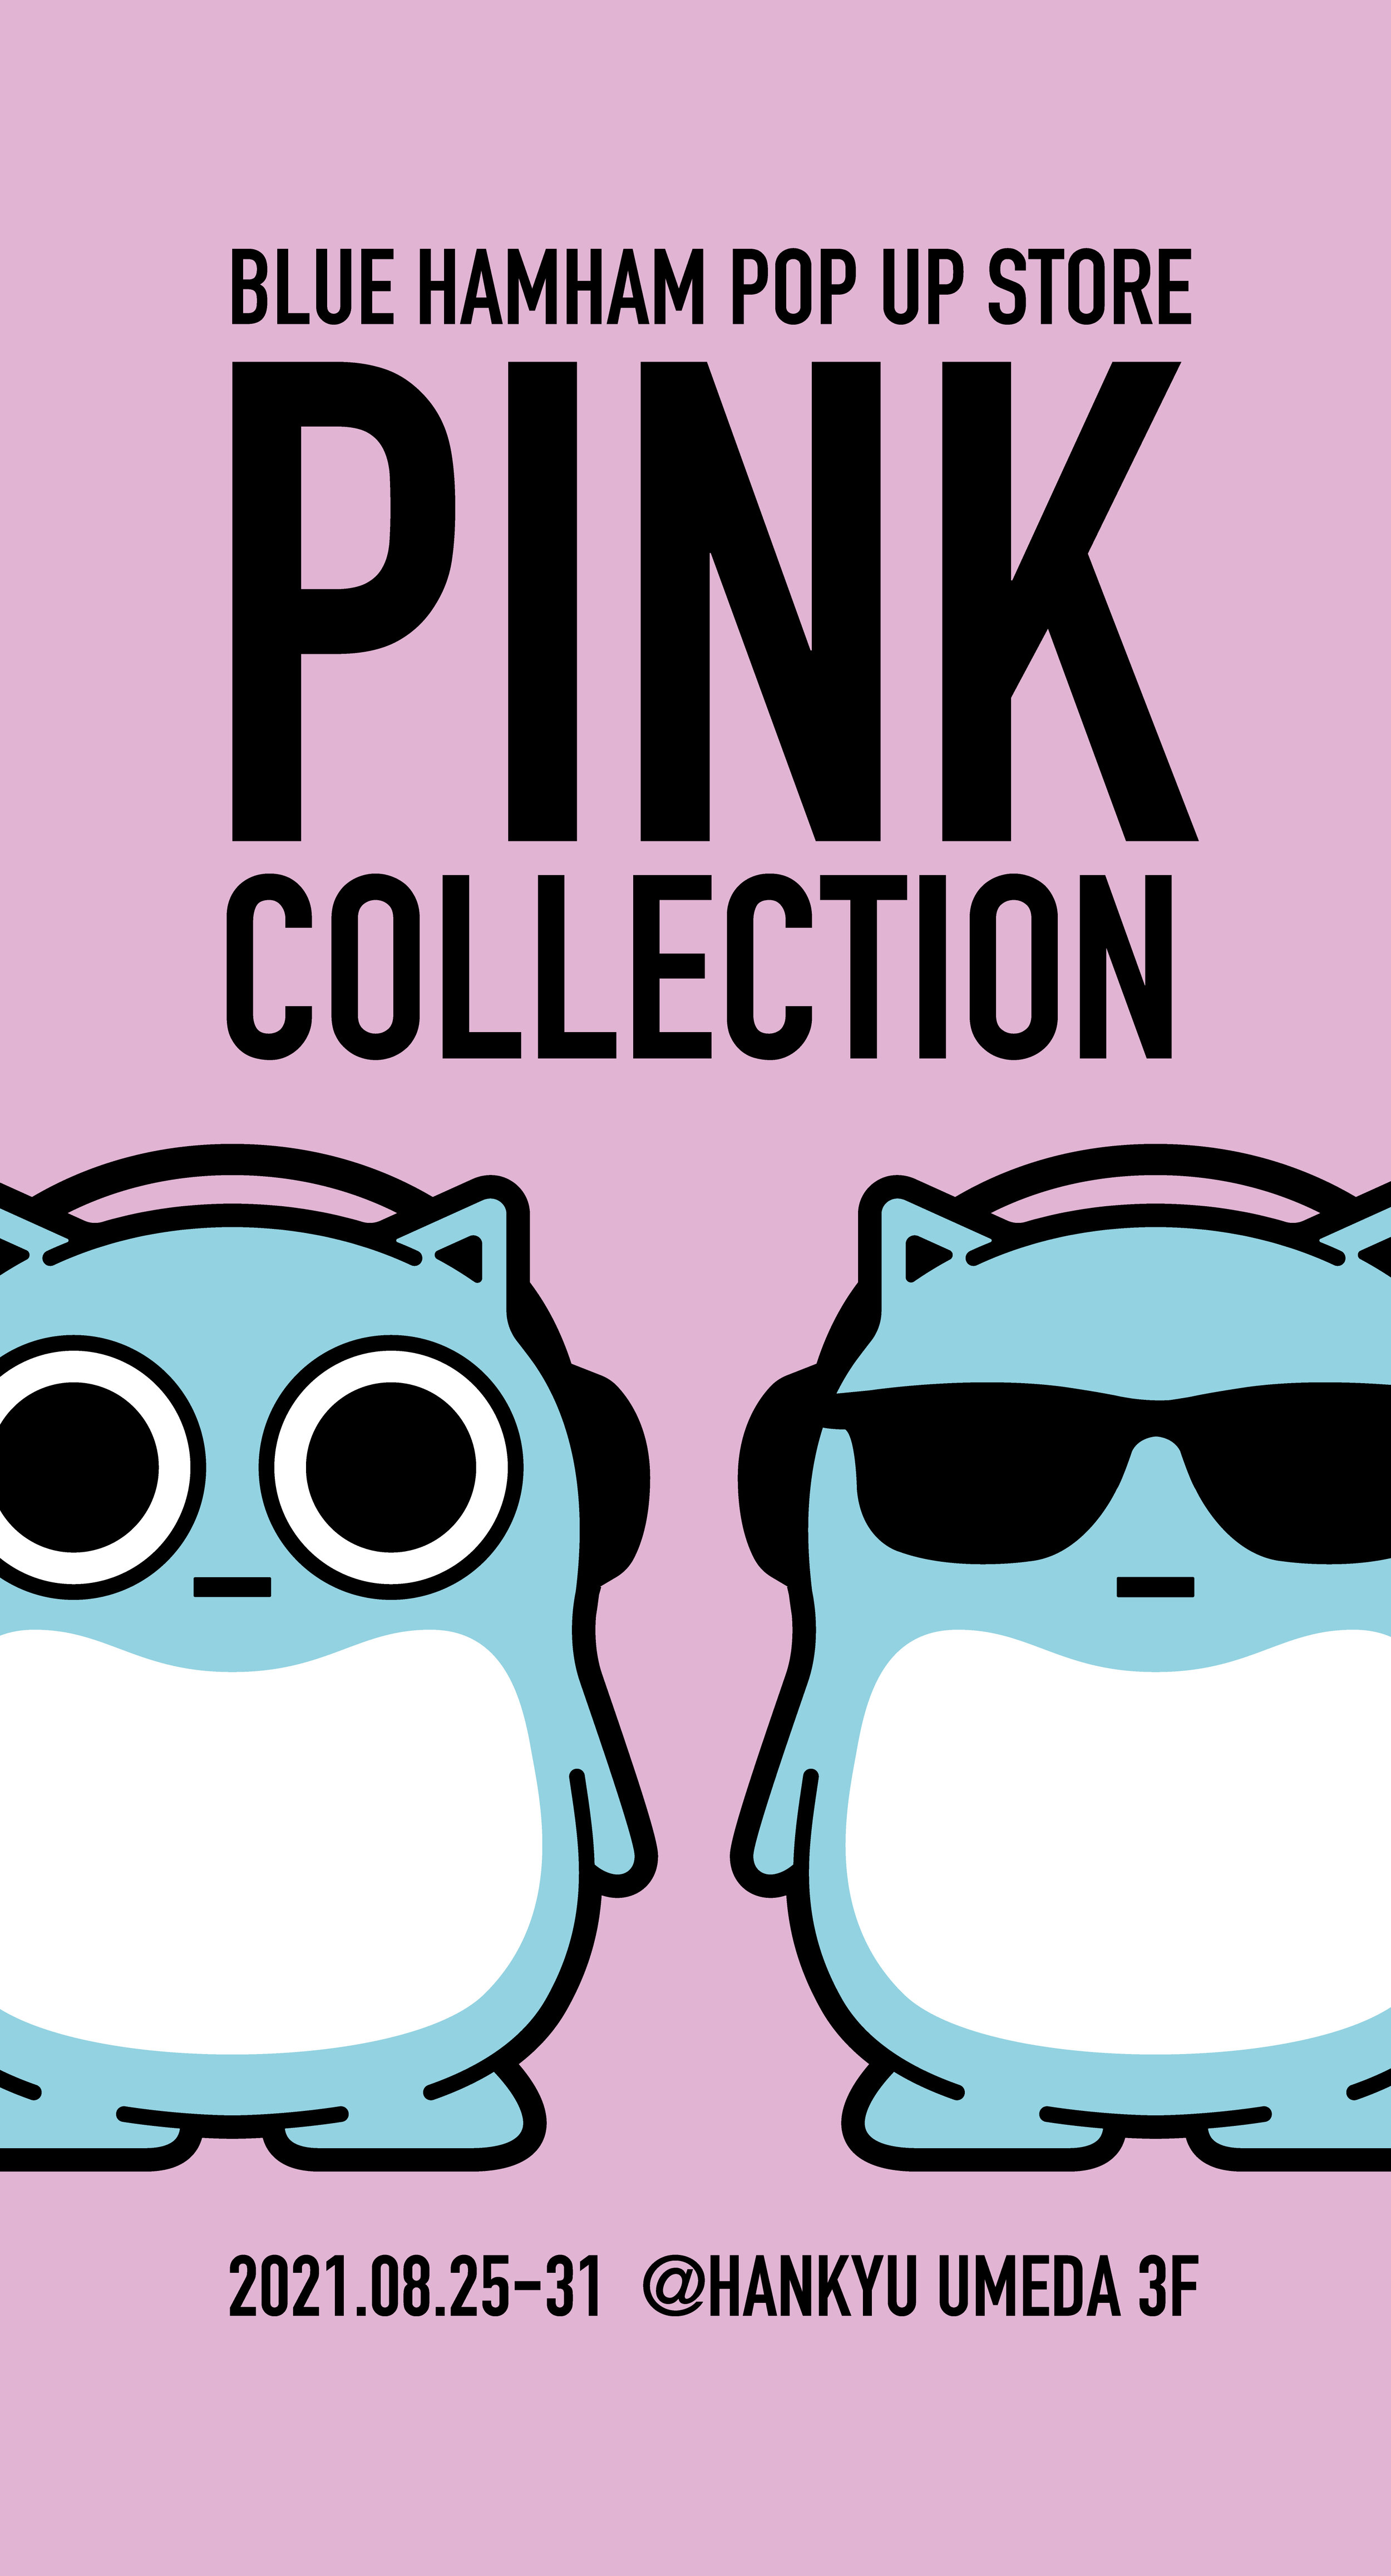 Blue Hamham Pop Up Store Pink Collection In 阪急うめだ本店 Popap ポパップ ポップアップ情報メディア